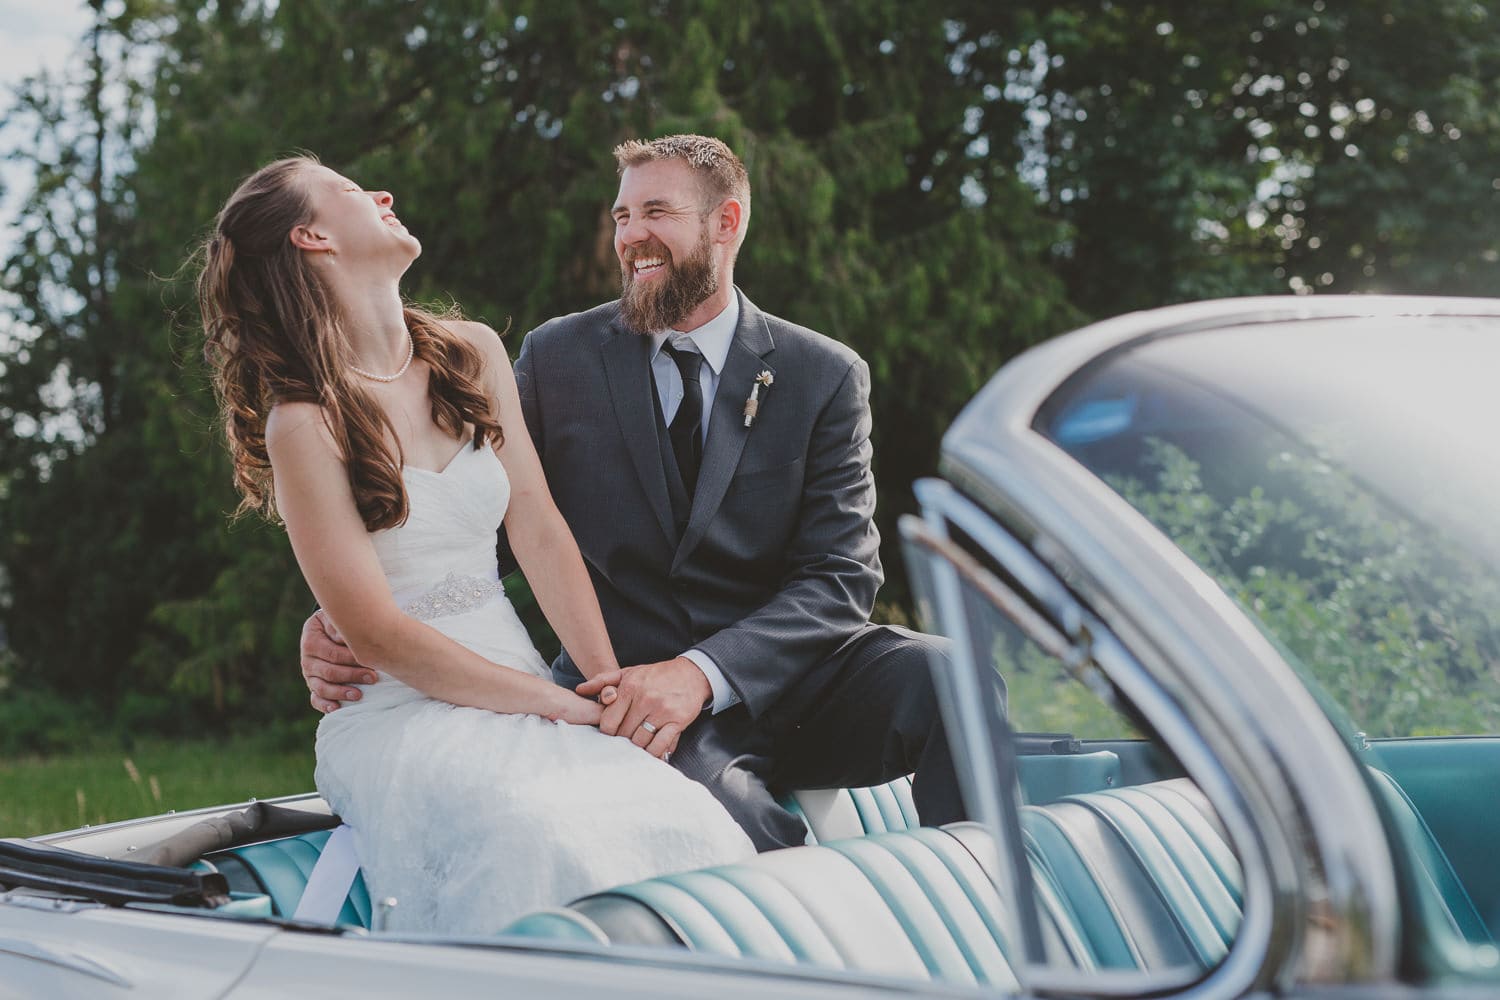 top tips for stress-free wedding photos